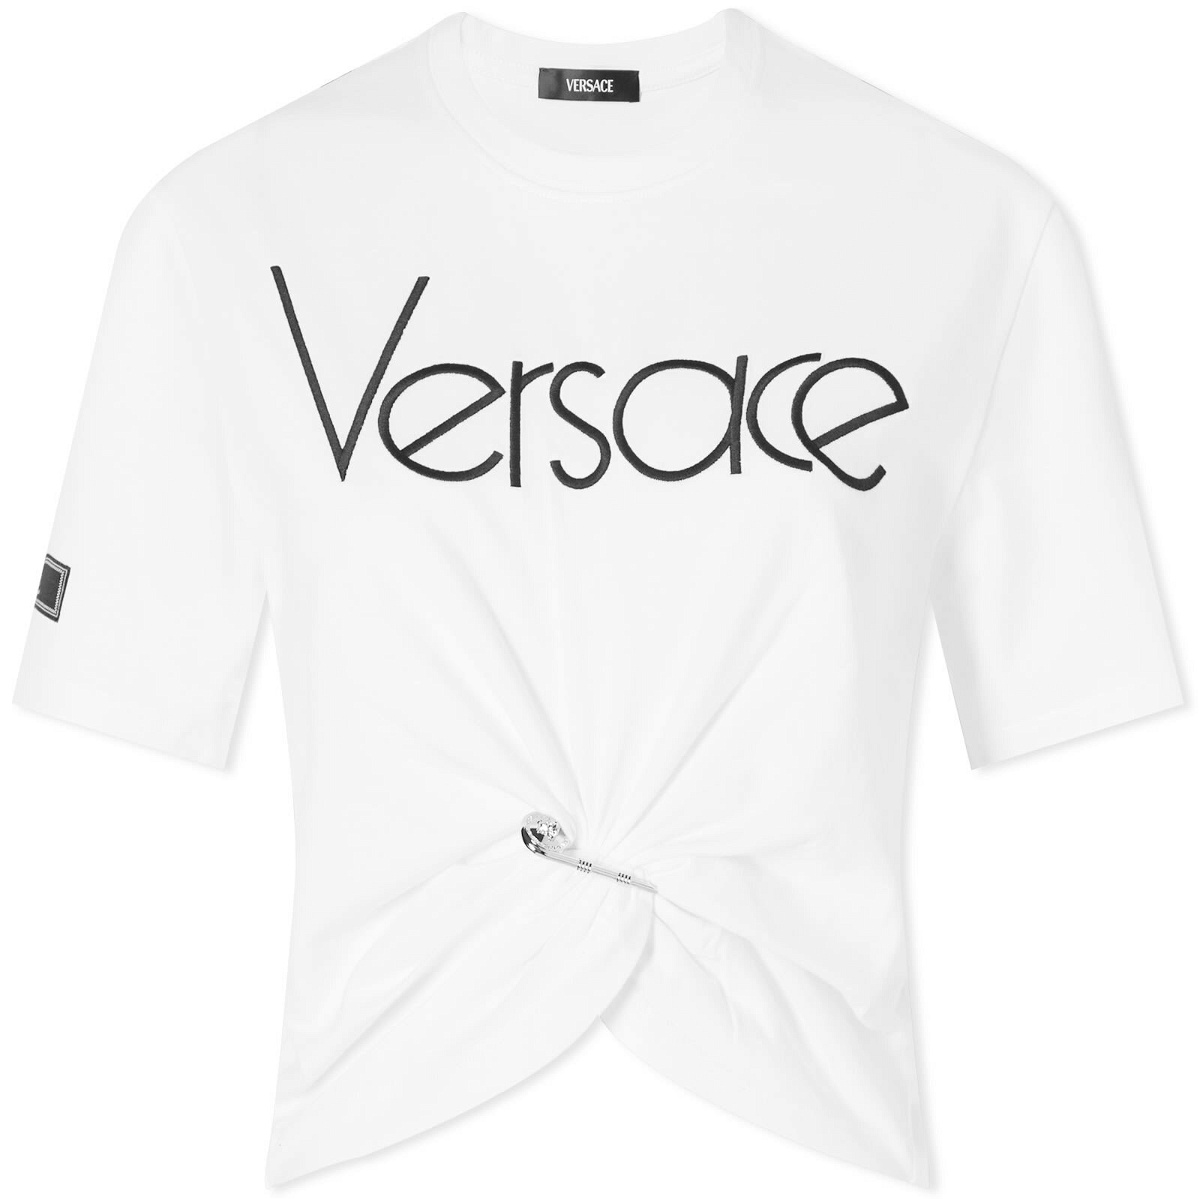 Versace Women's Cropped T-Shirt in White/Black Versace